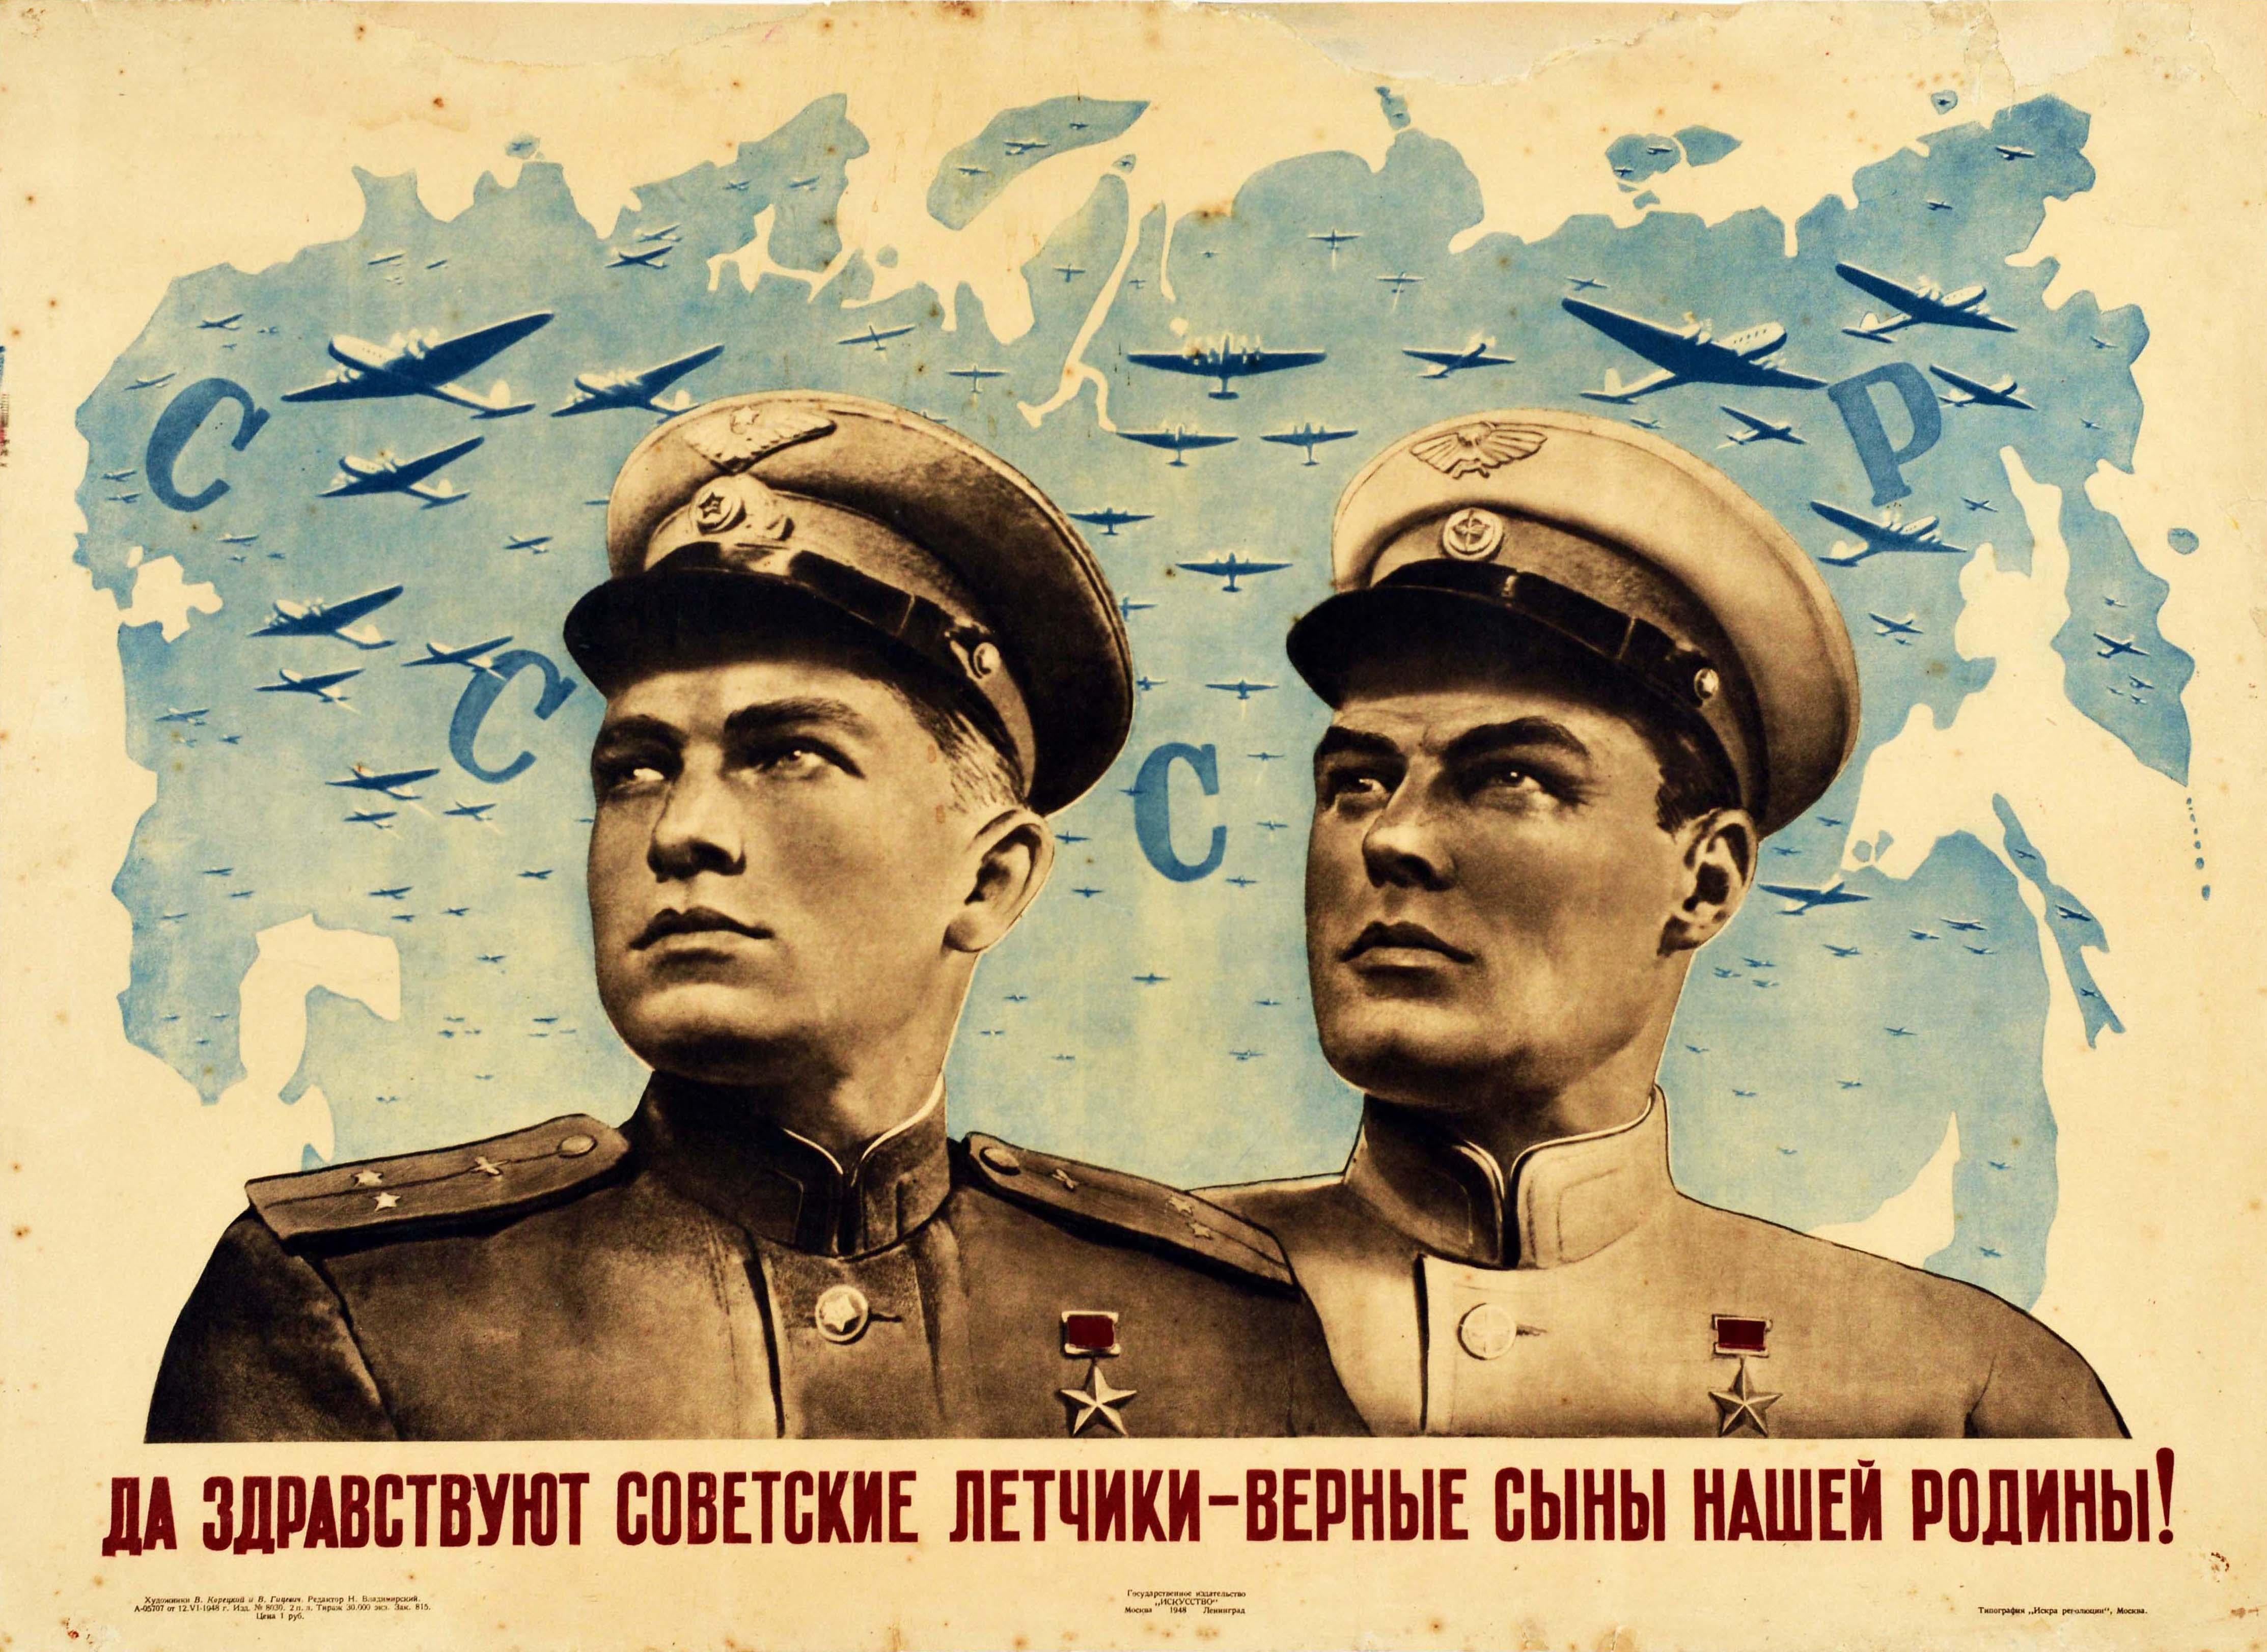 Koretsky Gitsevich Print - Original Vintage Poster Soviet Hero Pilots Loyal Sons Of Homeland USSR Air Force